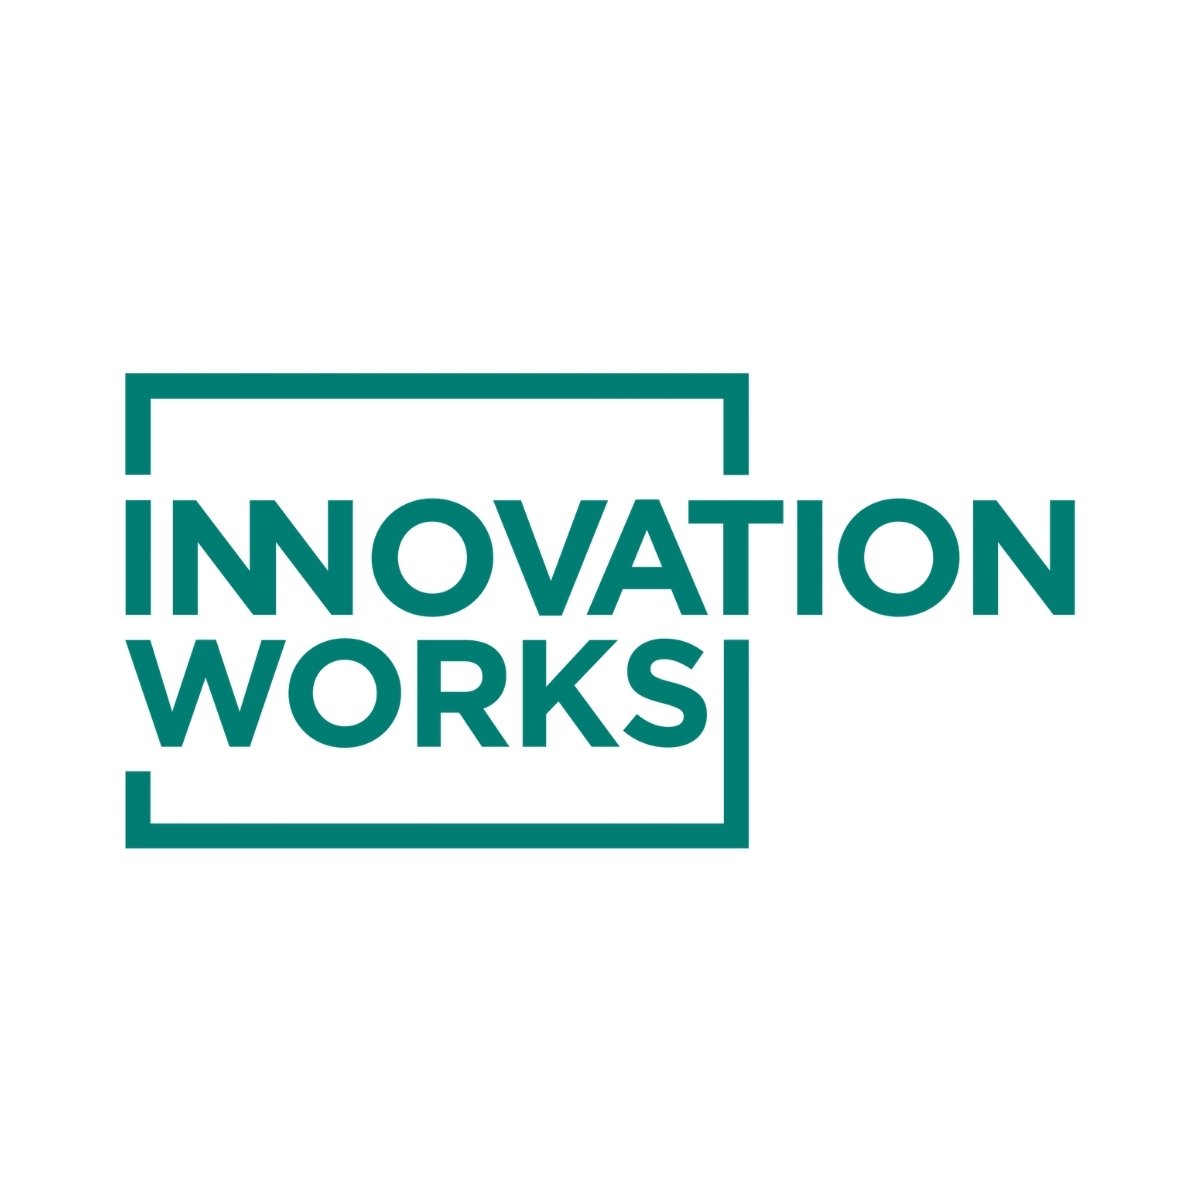 innovation works logo